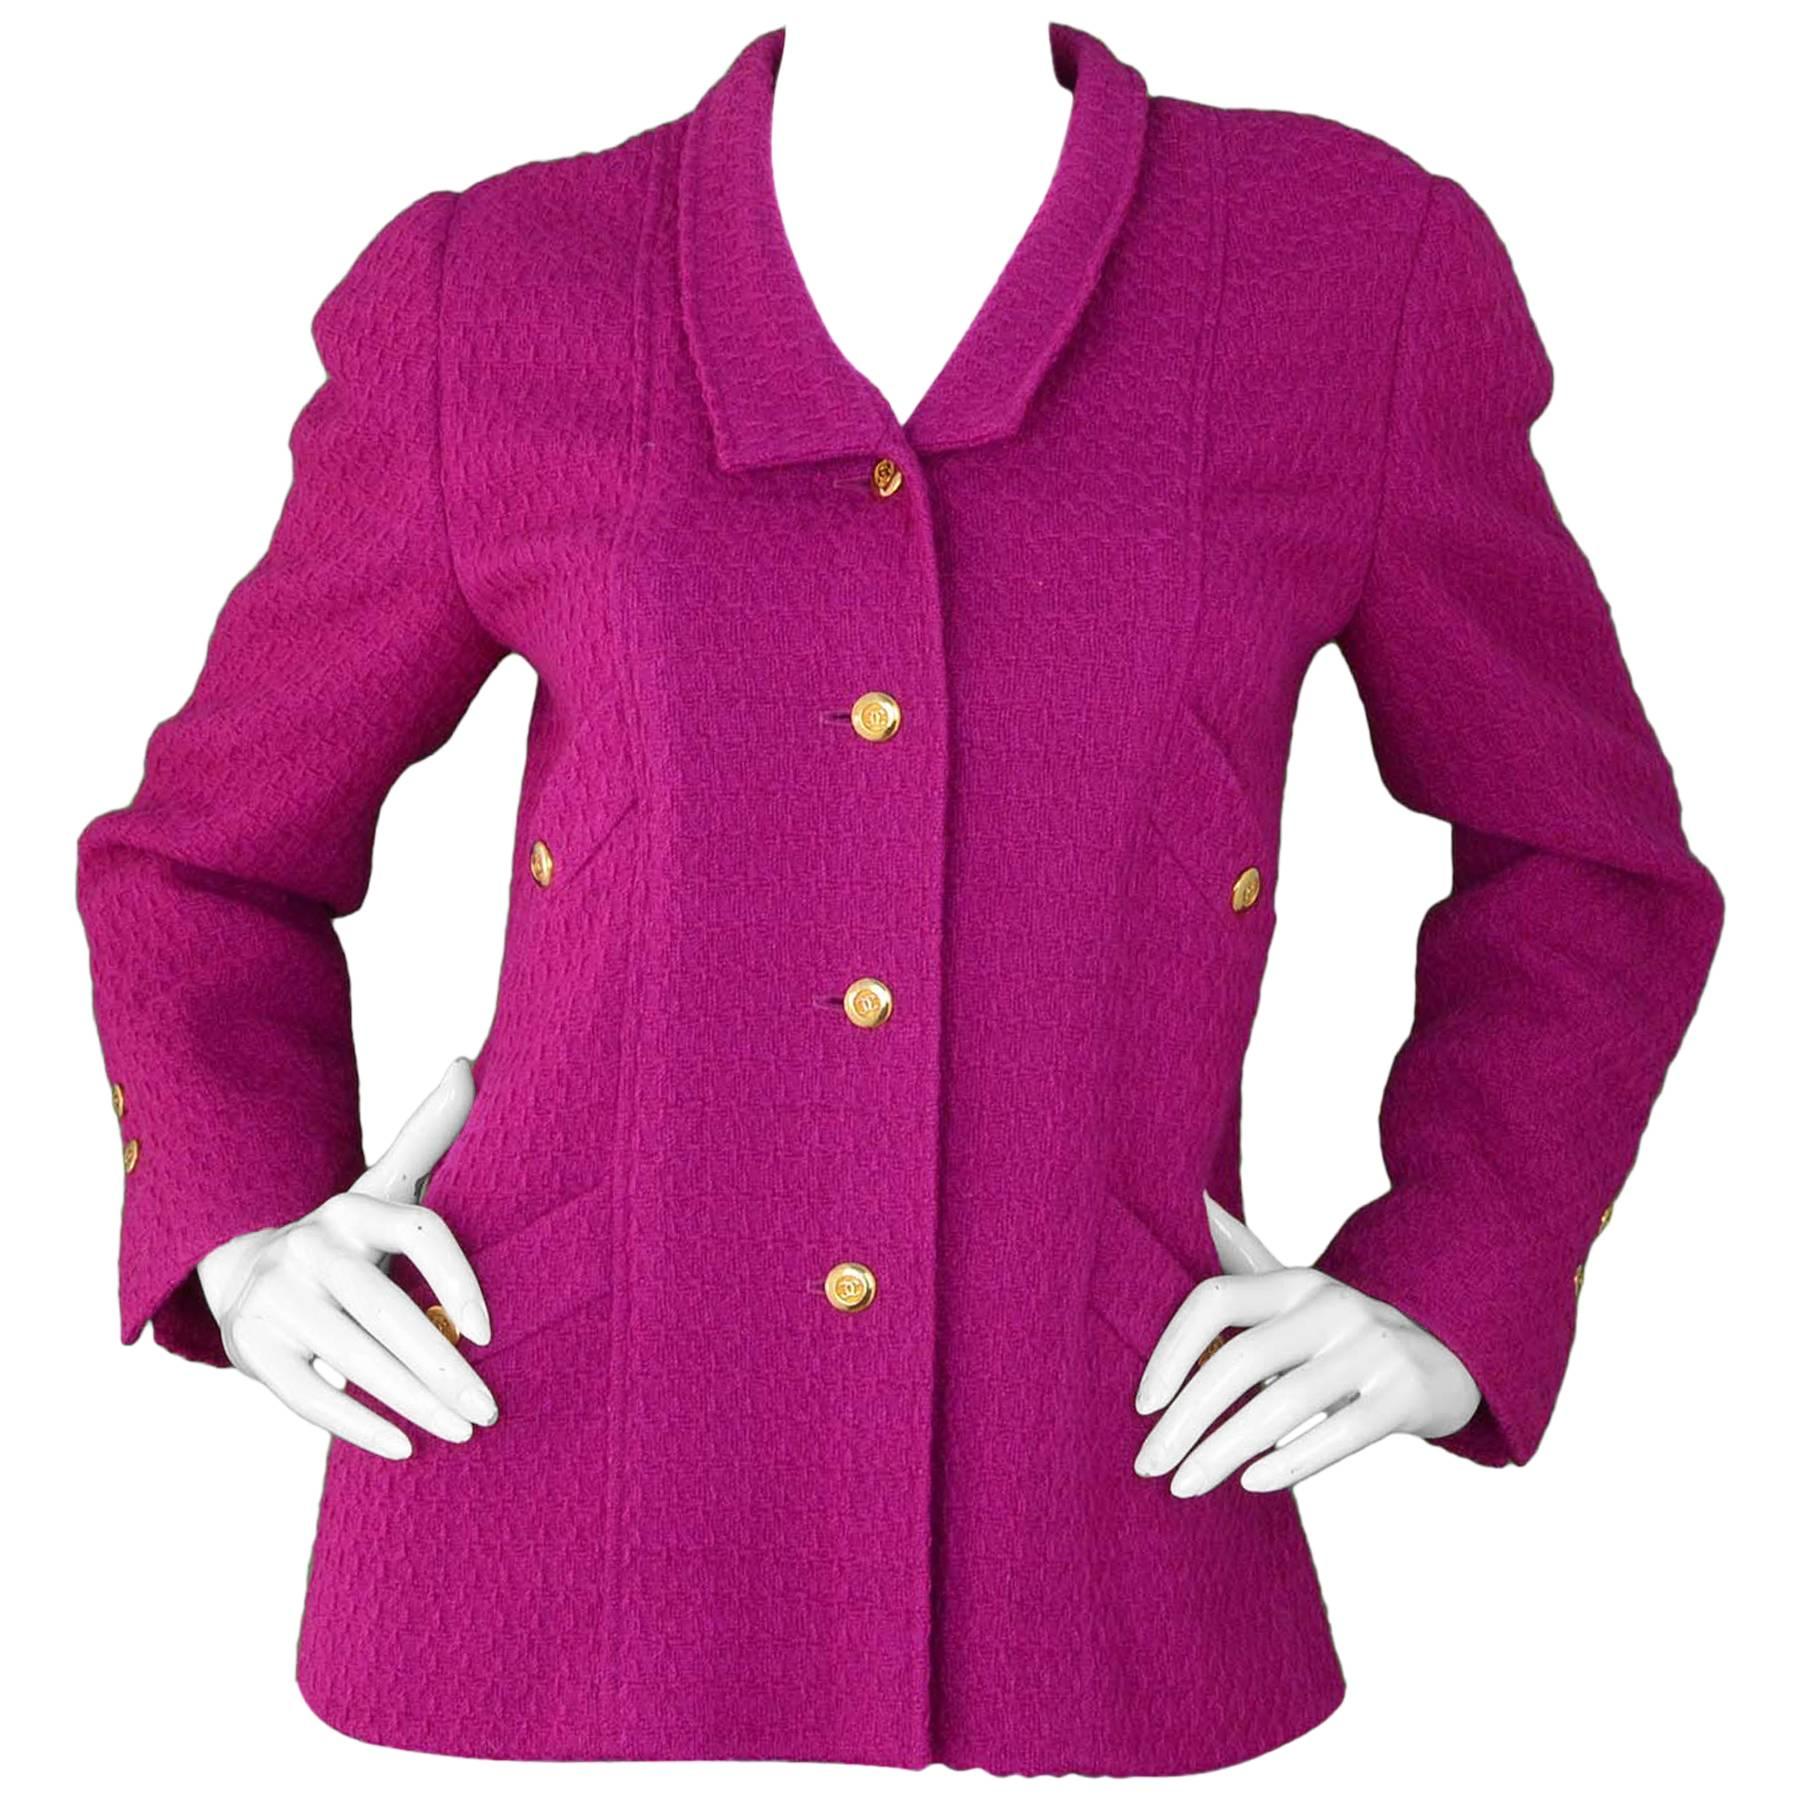 Chanel Fuchsia Wool Jacket sz 42 